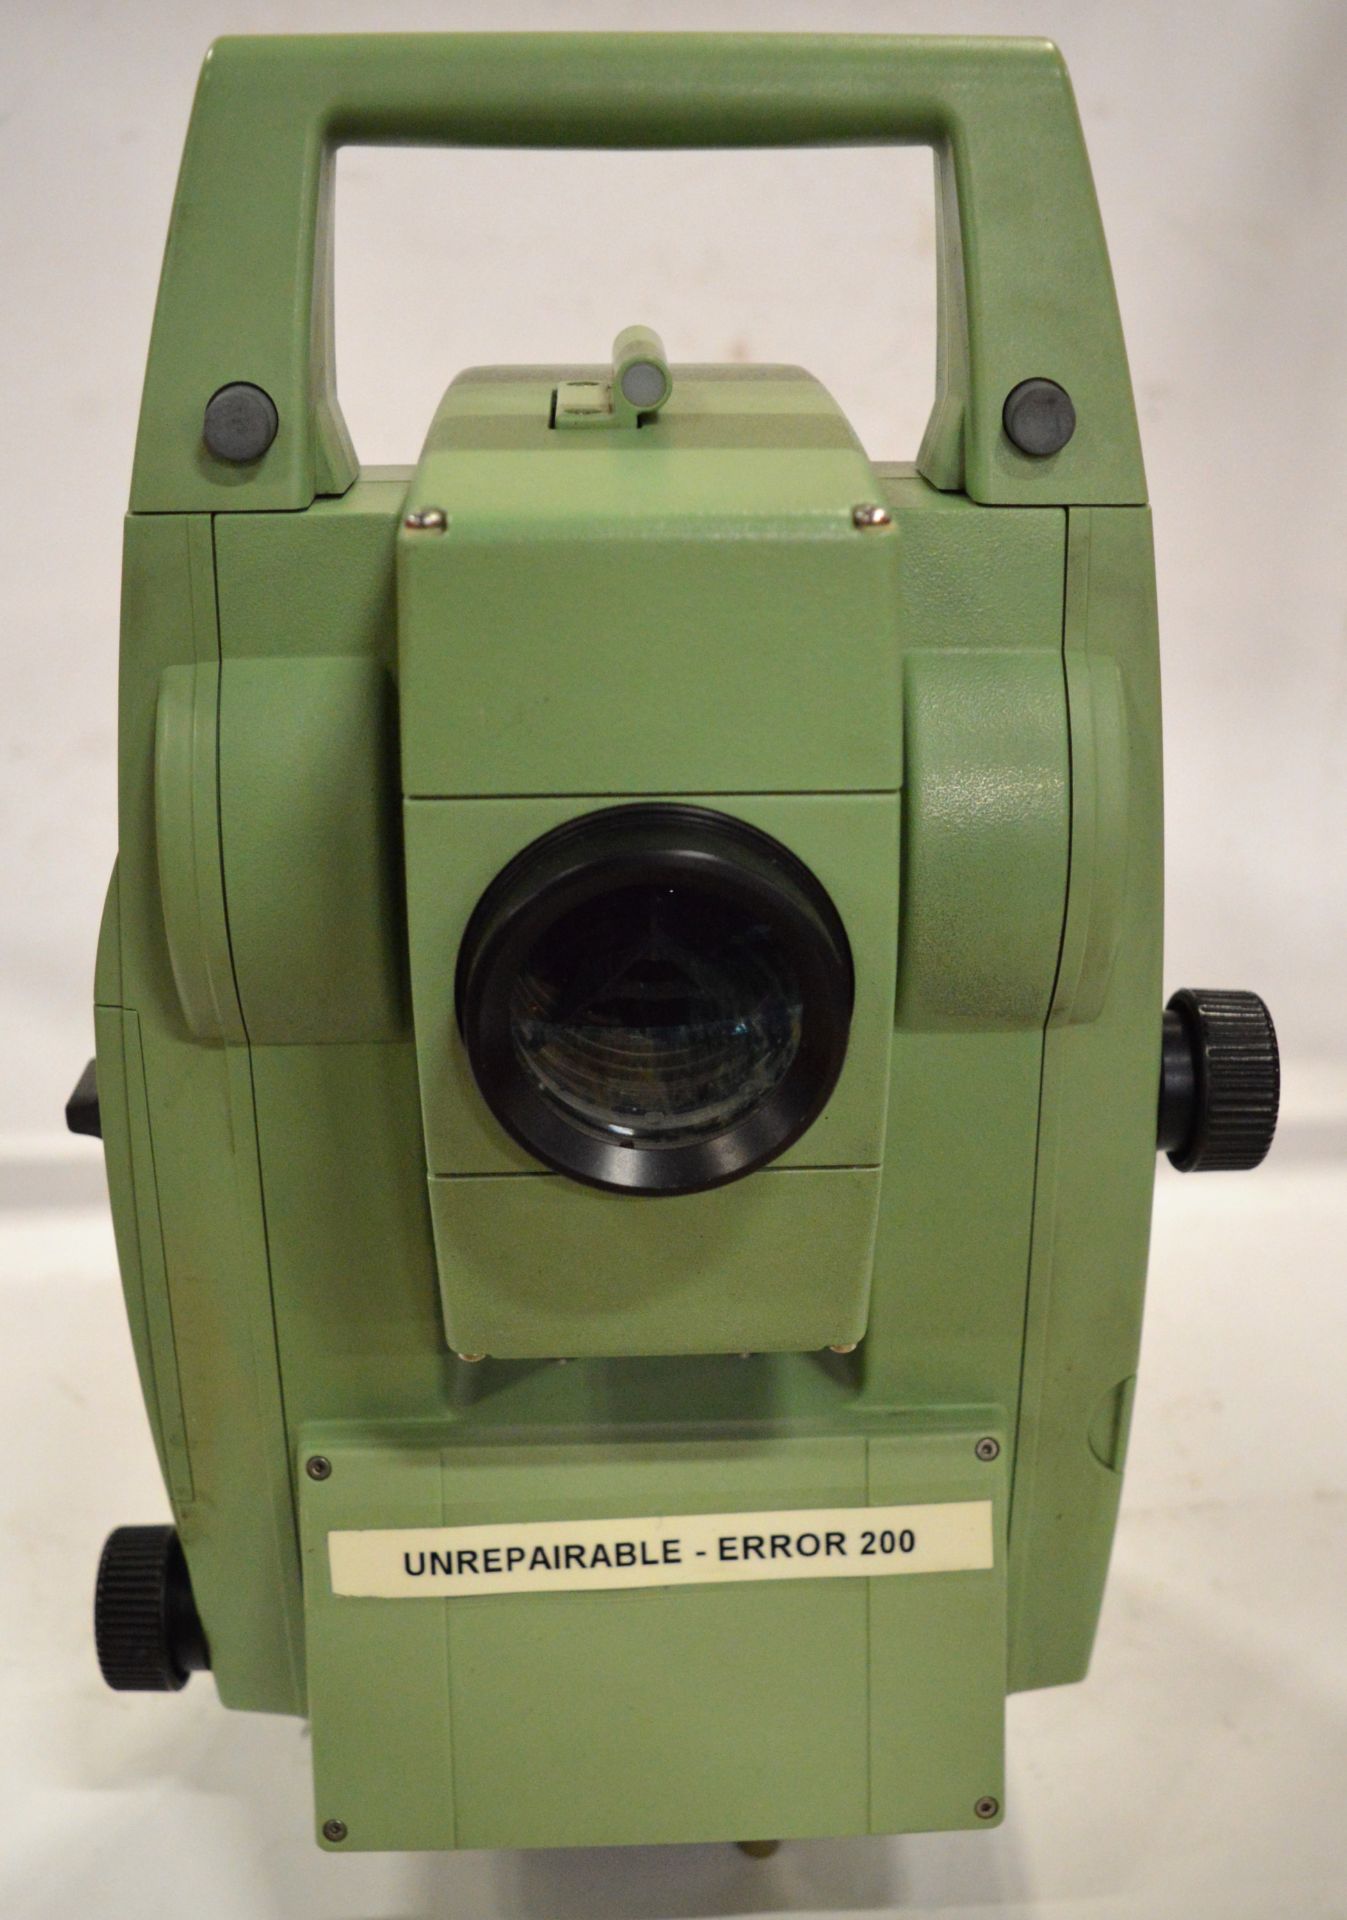 Leica TCRA1103 Surveying Equipment. - Image 4 of 5